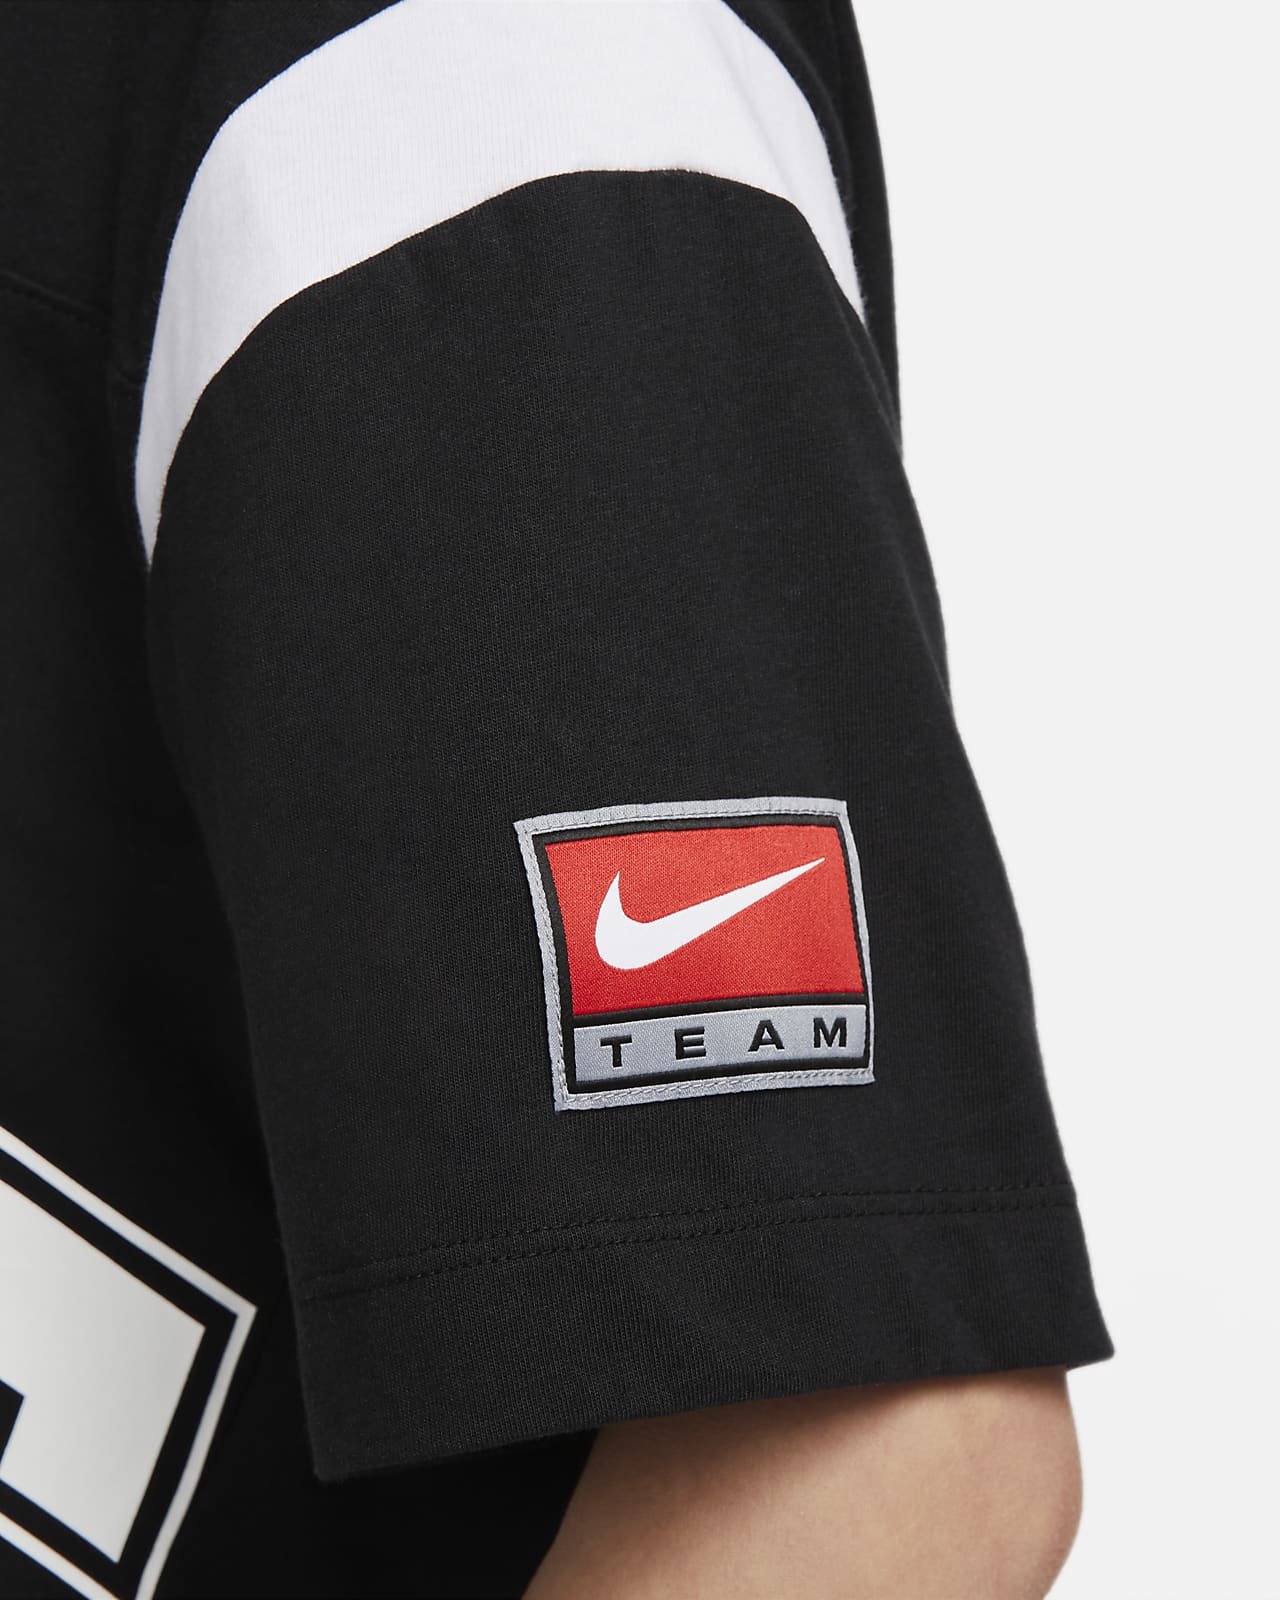 beweging zelf onderschrift Nike Sportswear Team Nike Women's Short-Sleeve Top. Nike ID